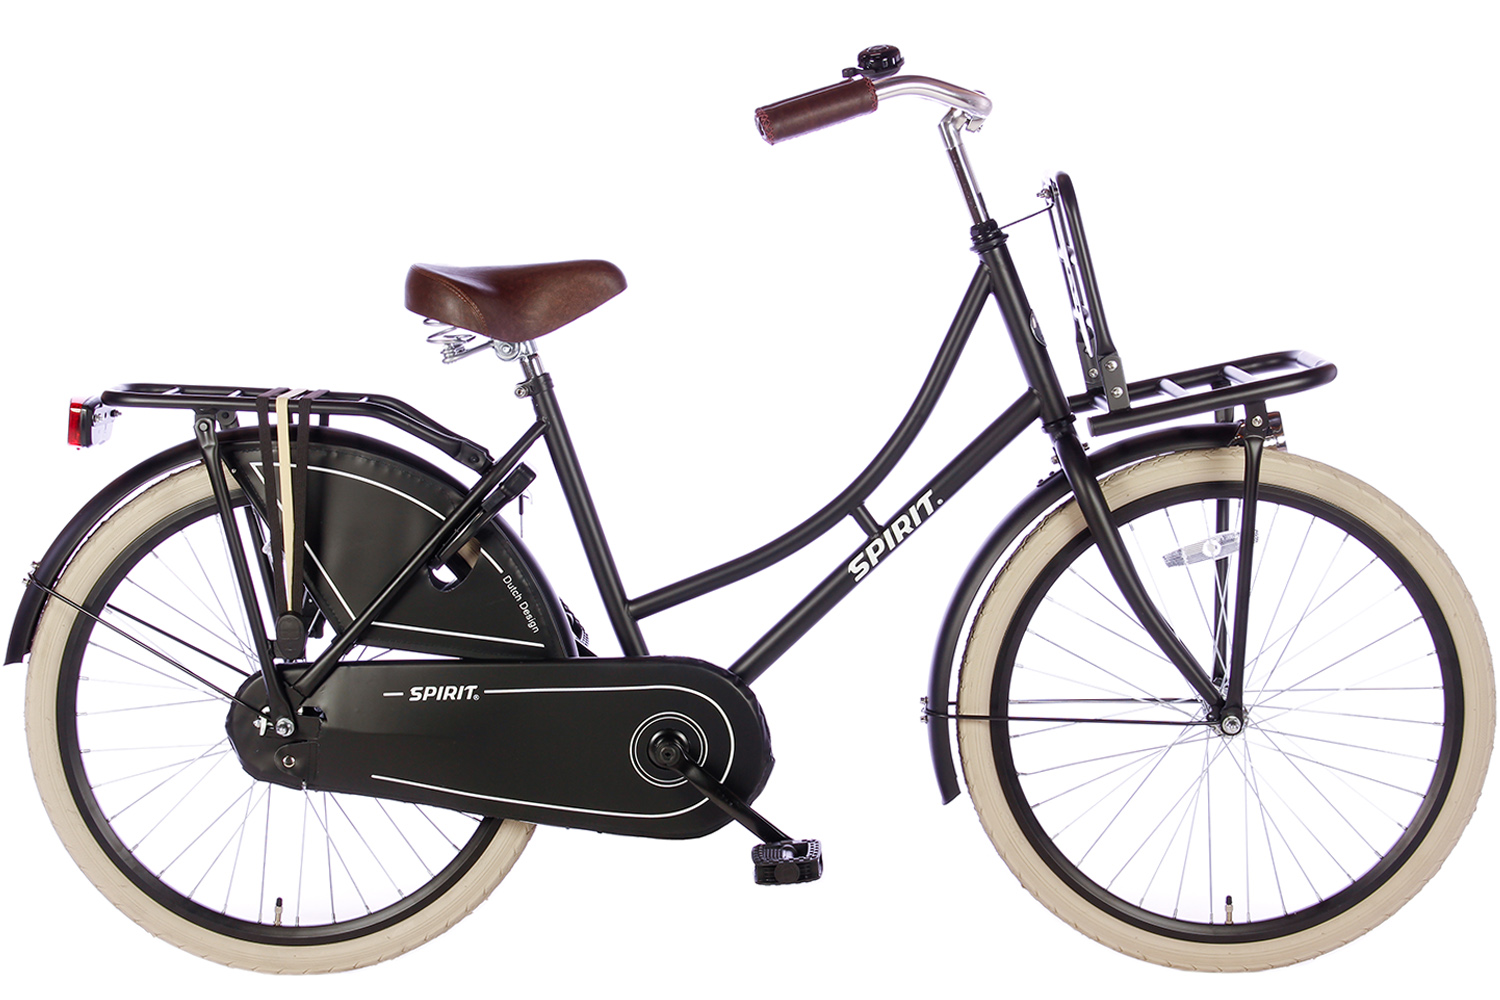 Overdreven sleuf Maak los Spirit Omafiets Mat-Zwart 24 inch - Laak Bike